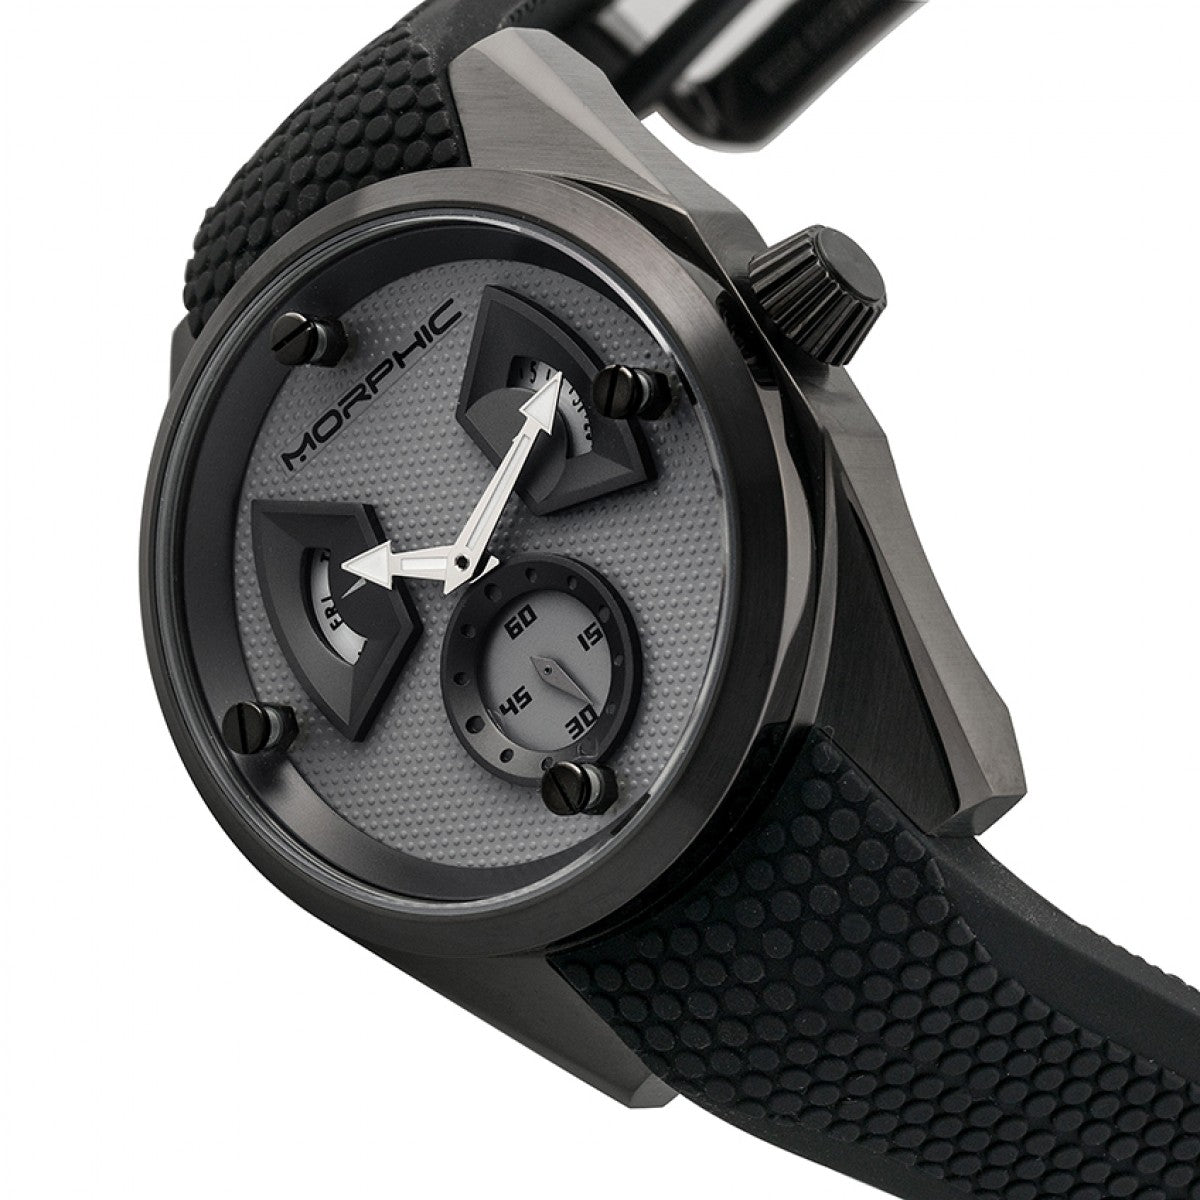 Morphic M34 Series Men's Watch w/ Day/Date - Black/Grey - MPH3403